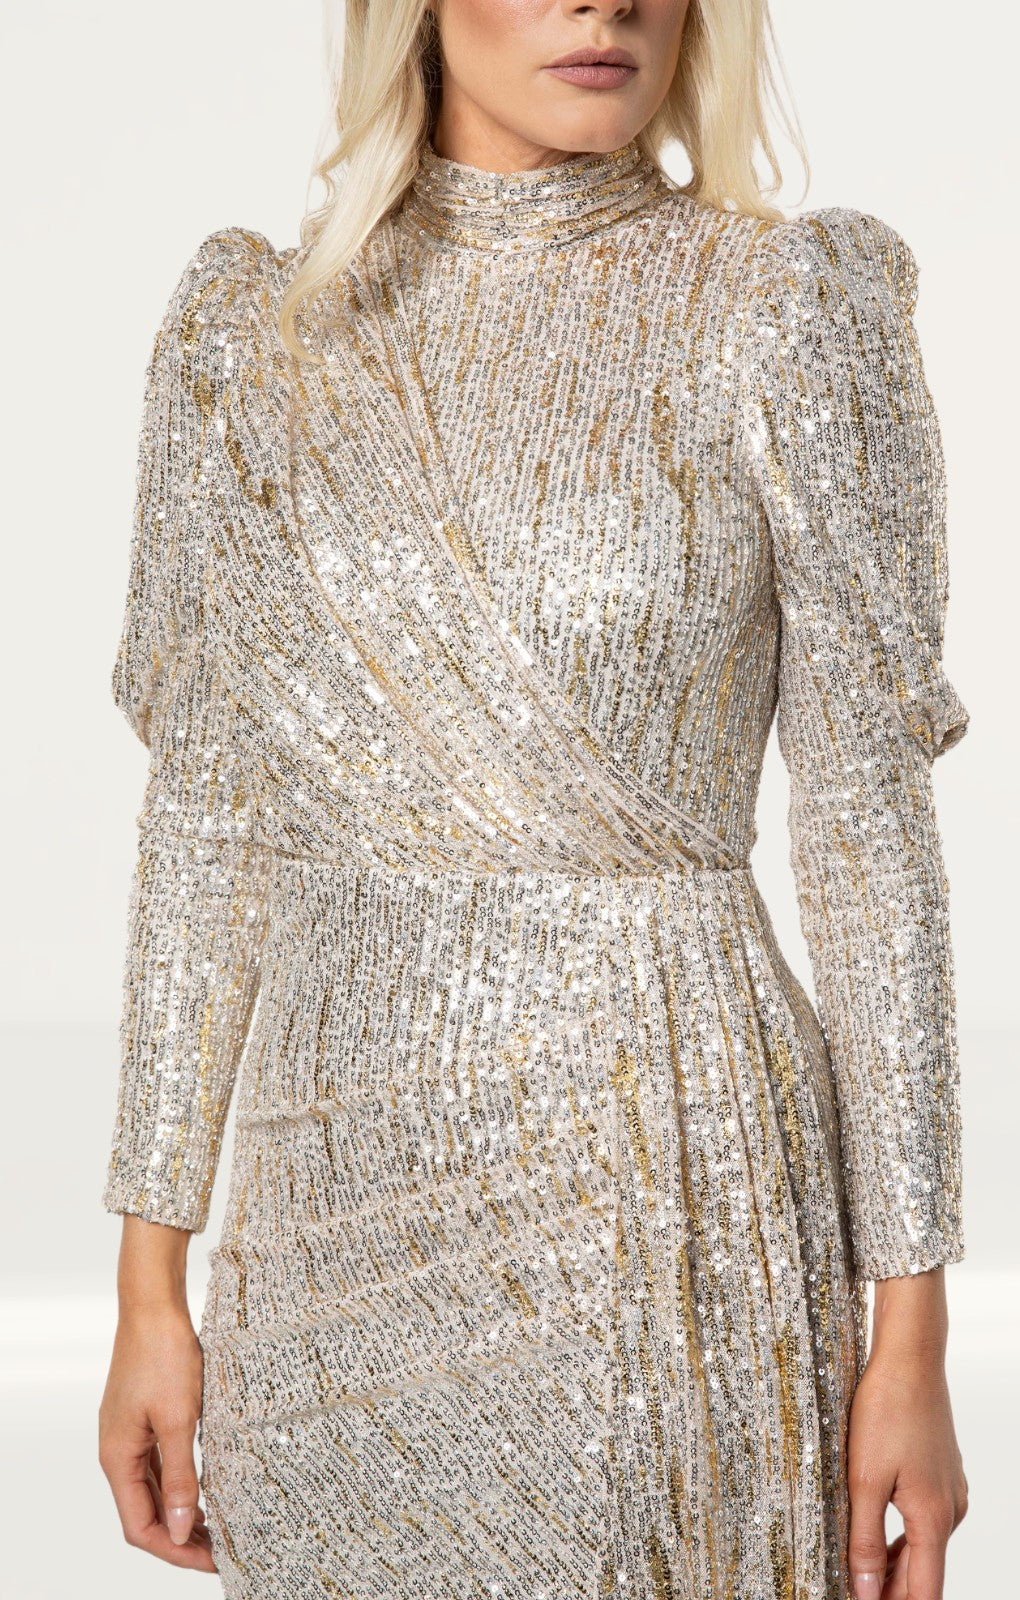 Saylor Gold Bianca Mini Dress product image